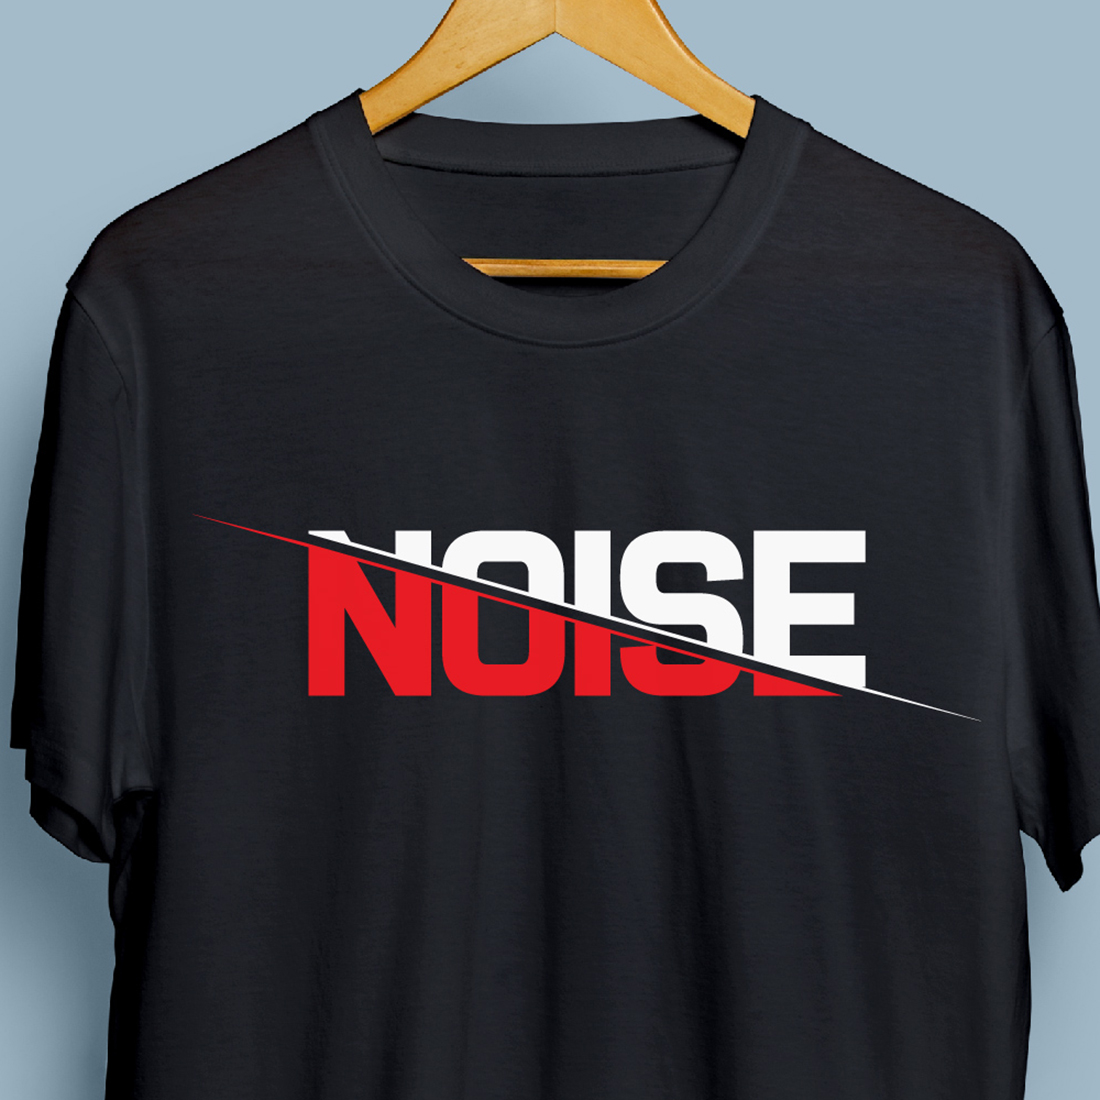 Noise t shirt design preview image.